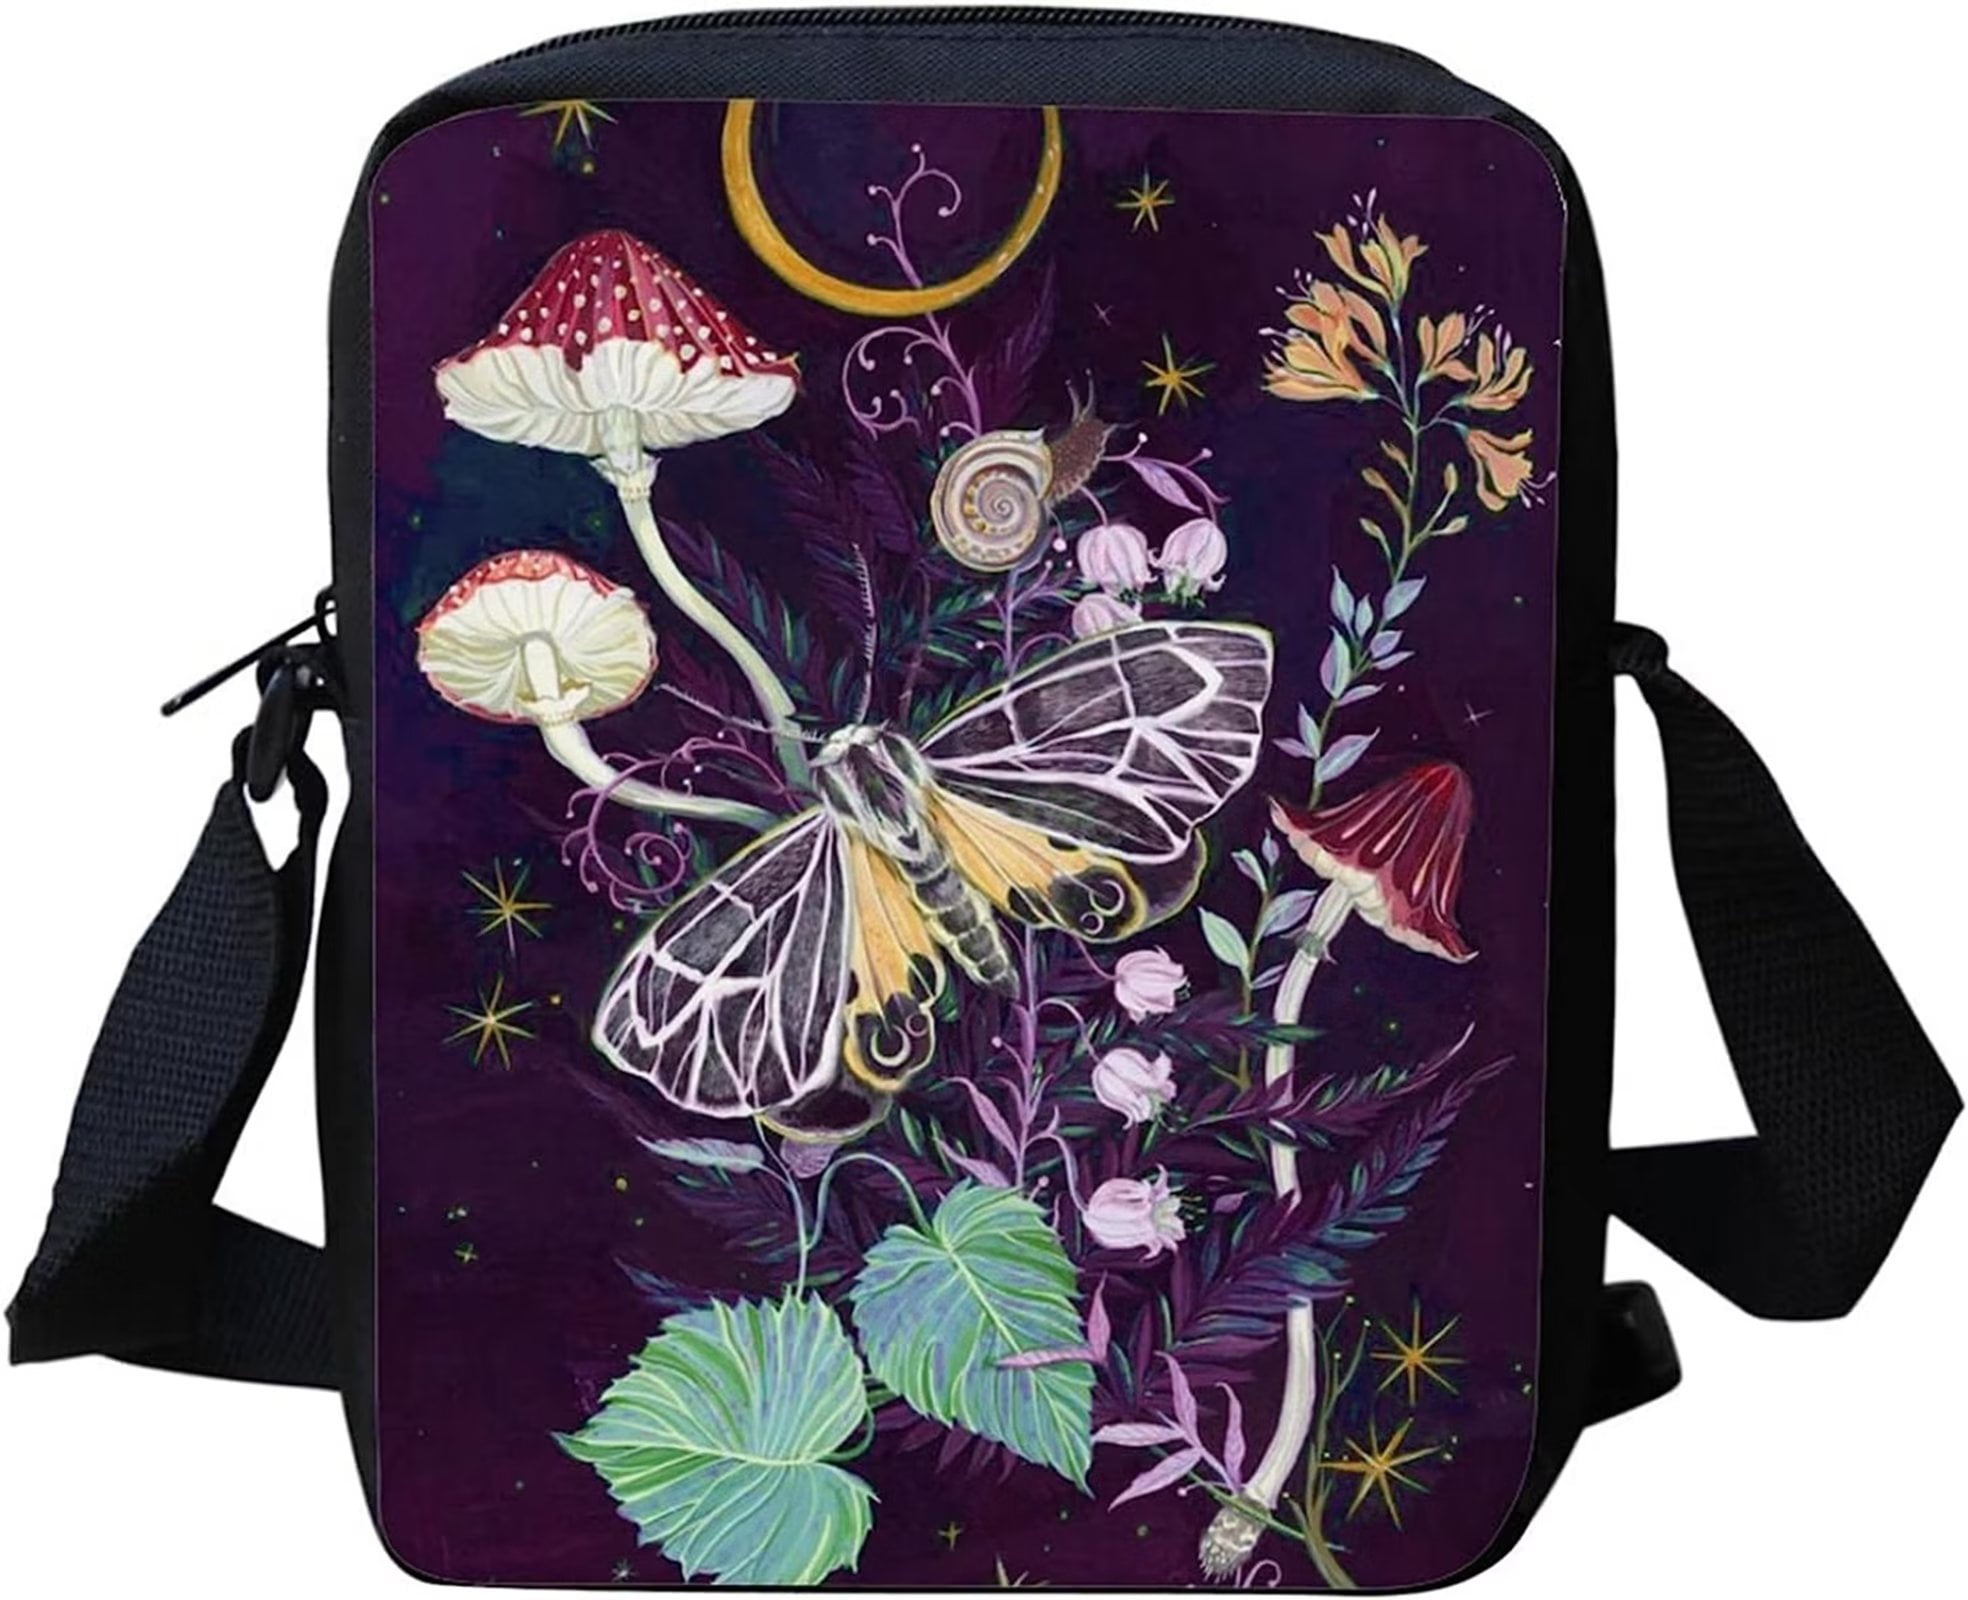 Pzuqiu Butterfly Handbag and Wallet Set